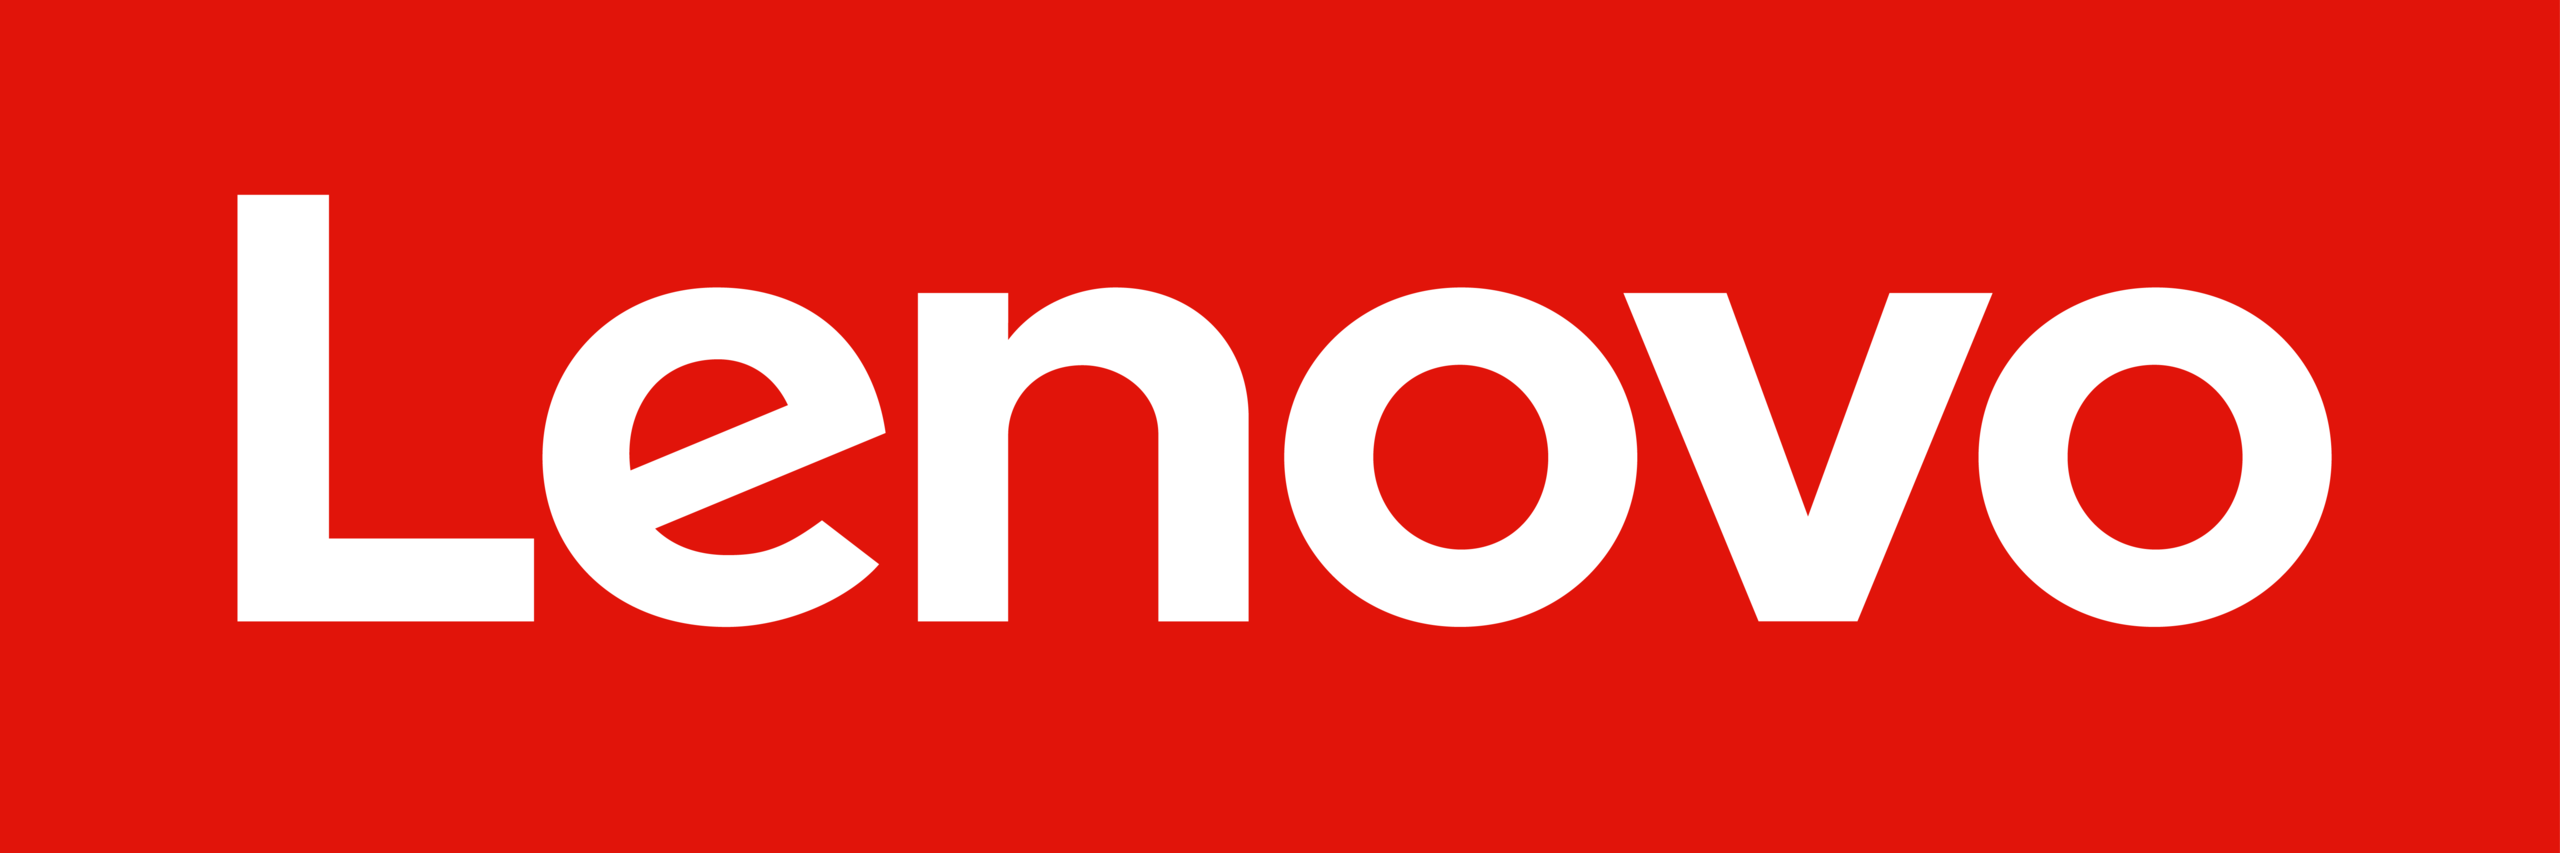 Lenovo_Global_Corporate_Logo